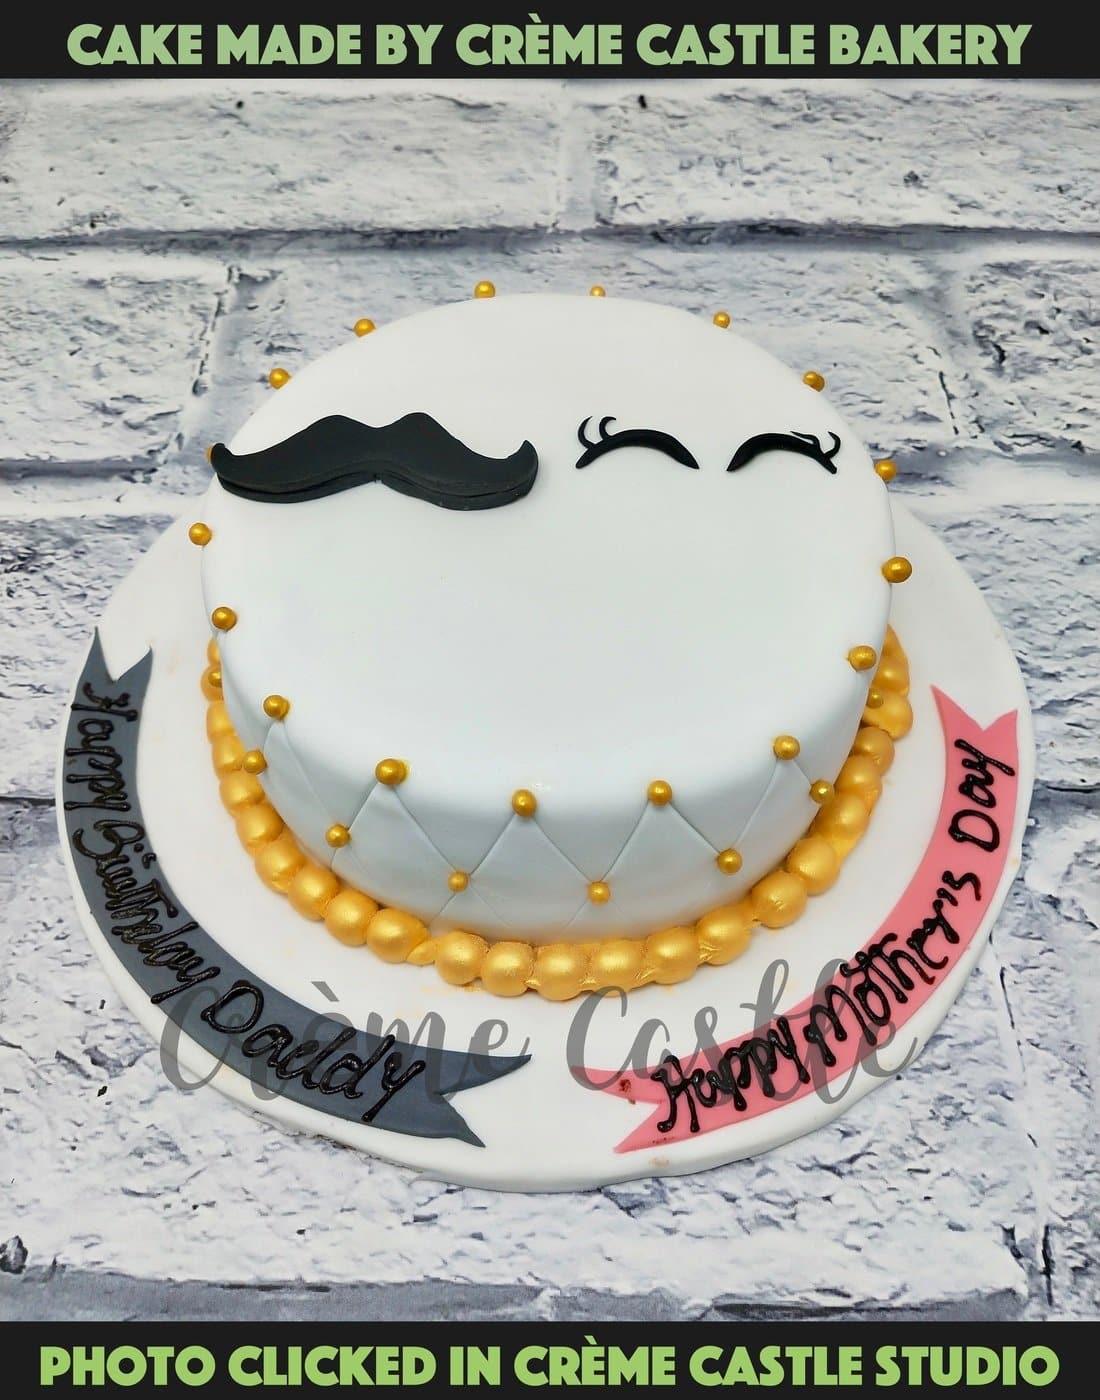 Moustache cake 2